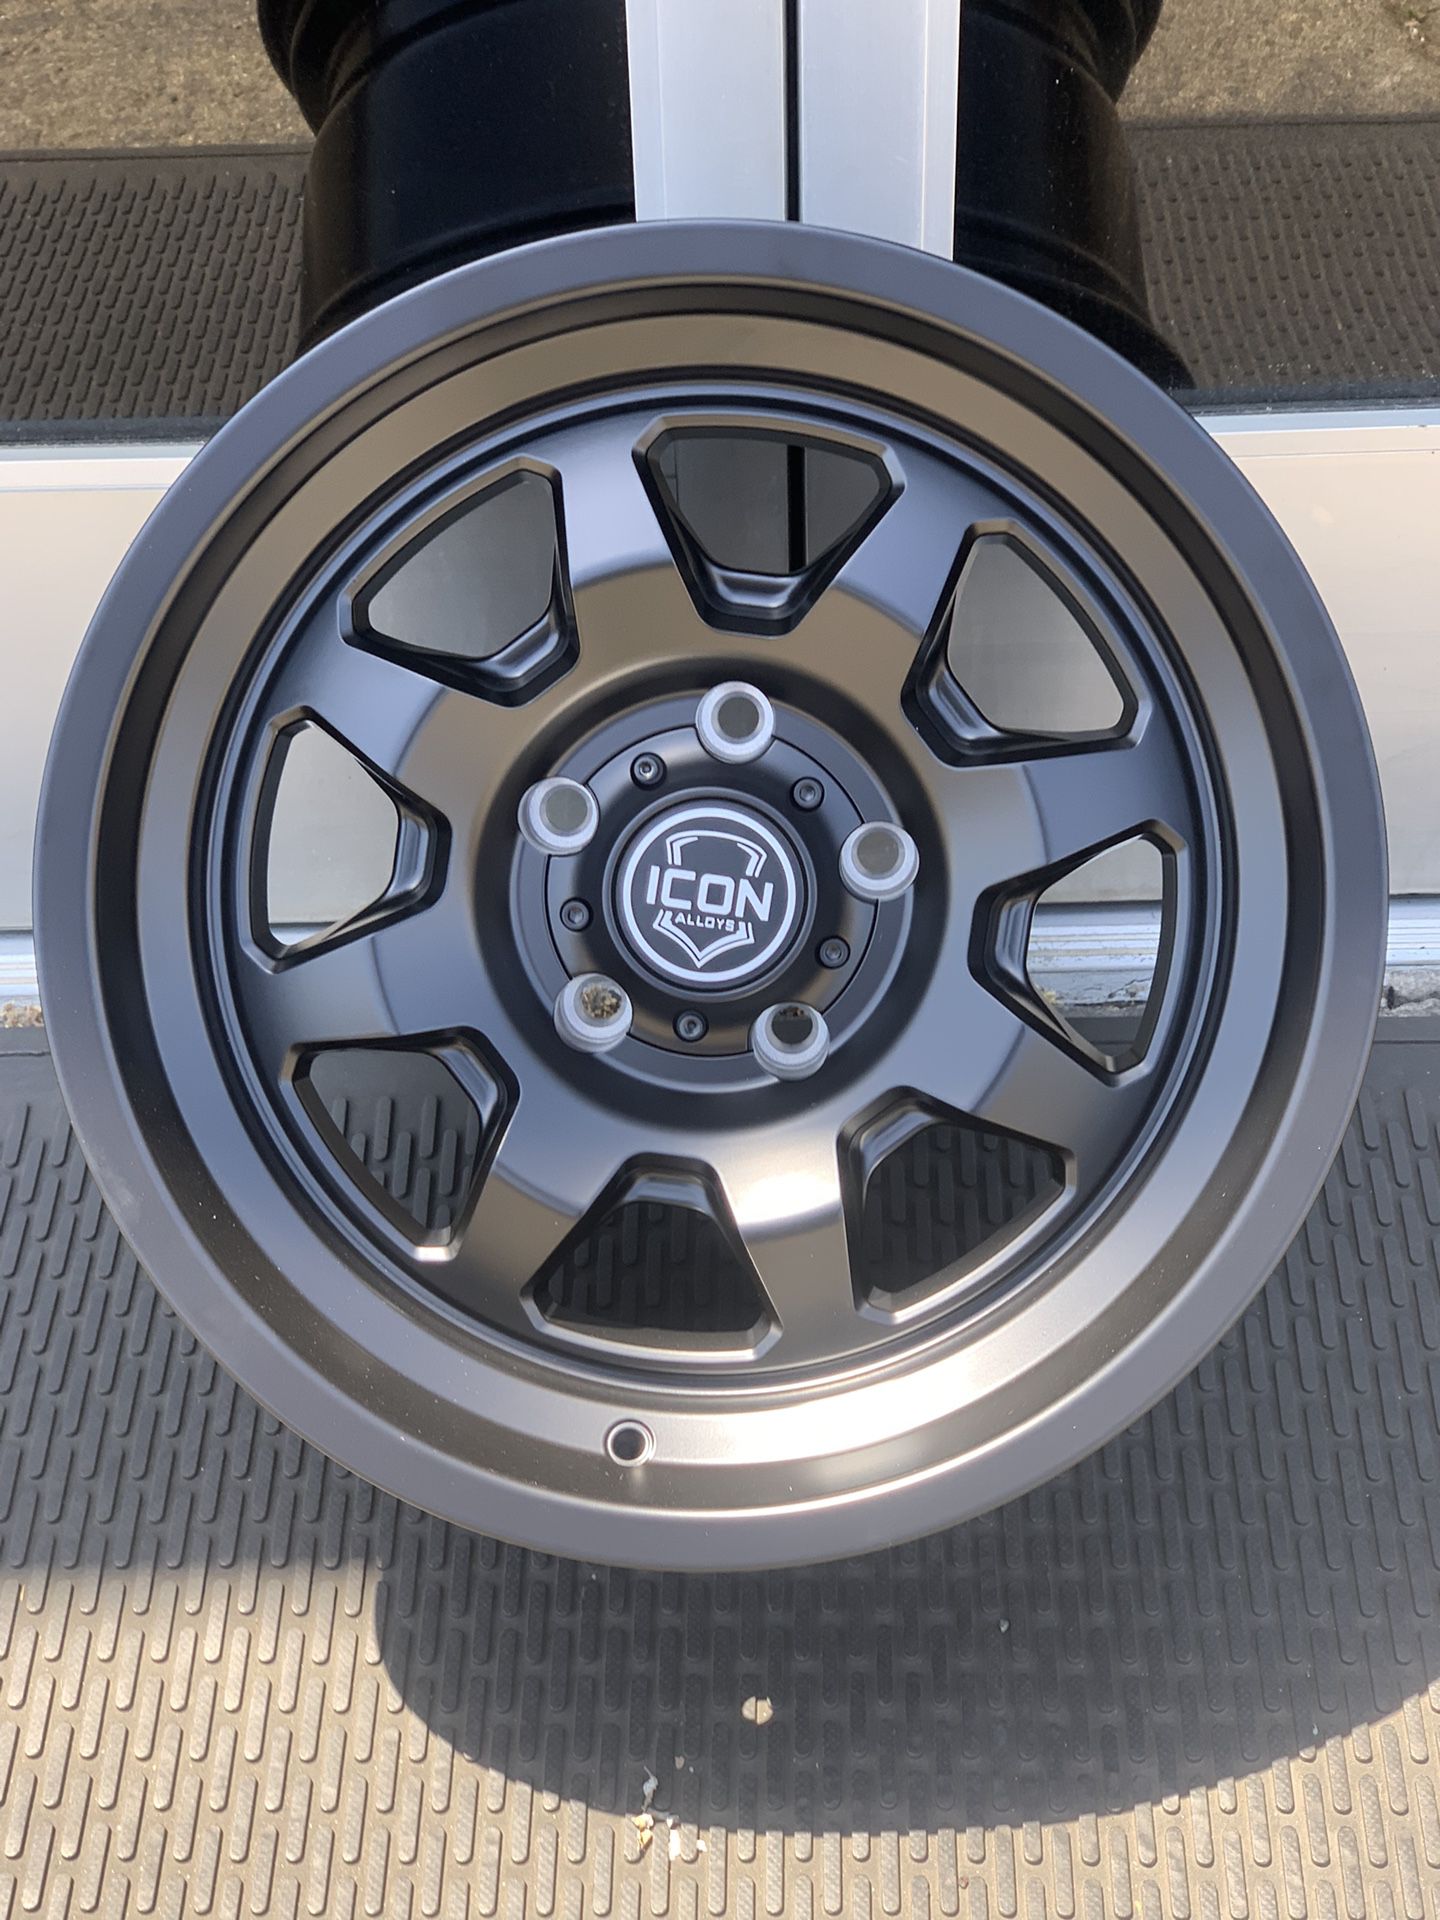 Icon Nuevo Wheels 17x8.5, 5x5 (5 New 